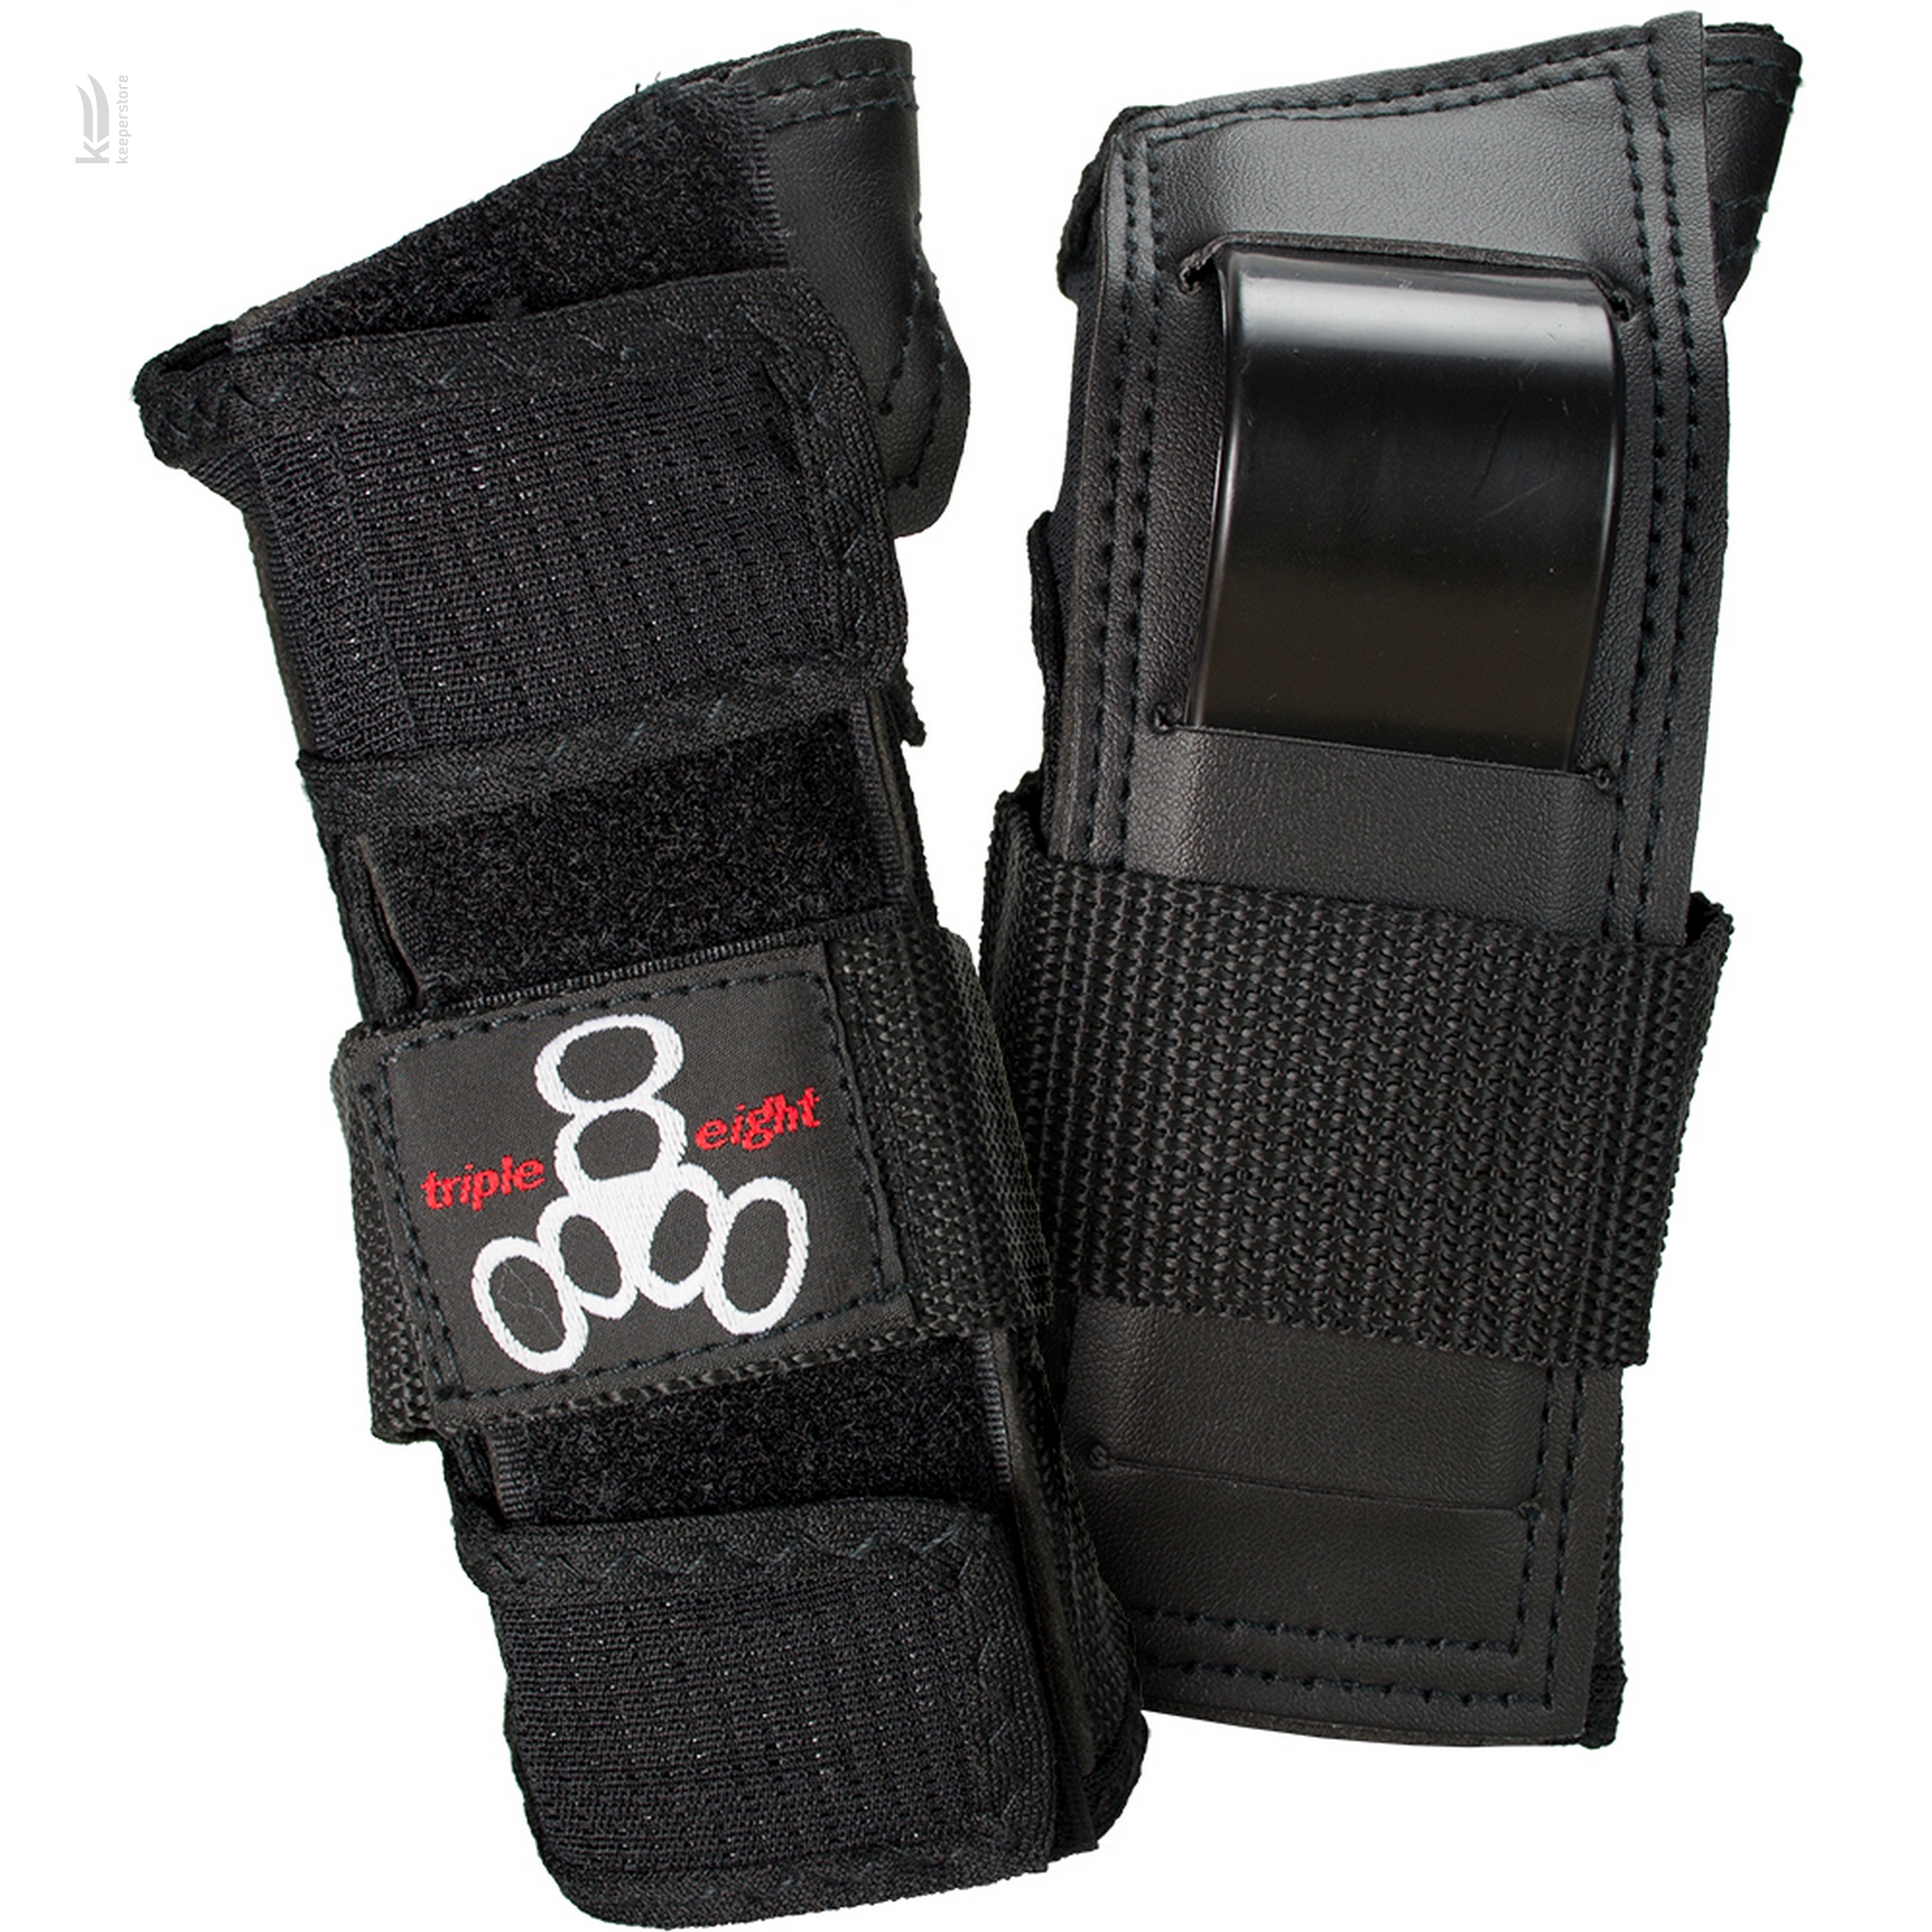 Спортивная защита для взрослых Triple8 Rental Wristsaver